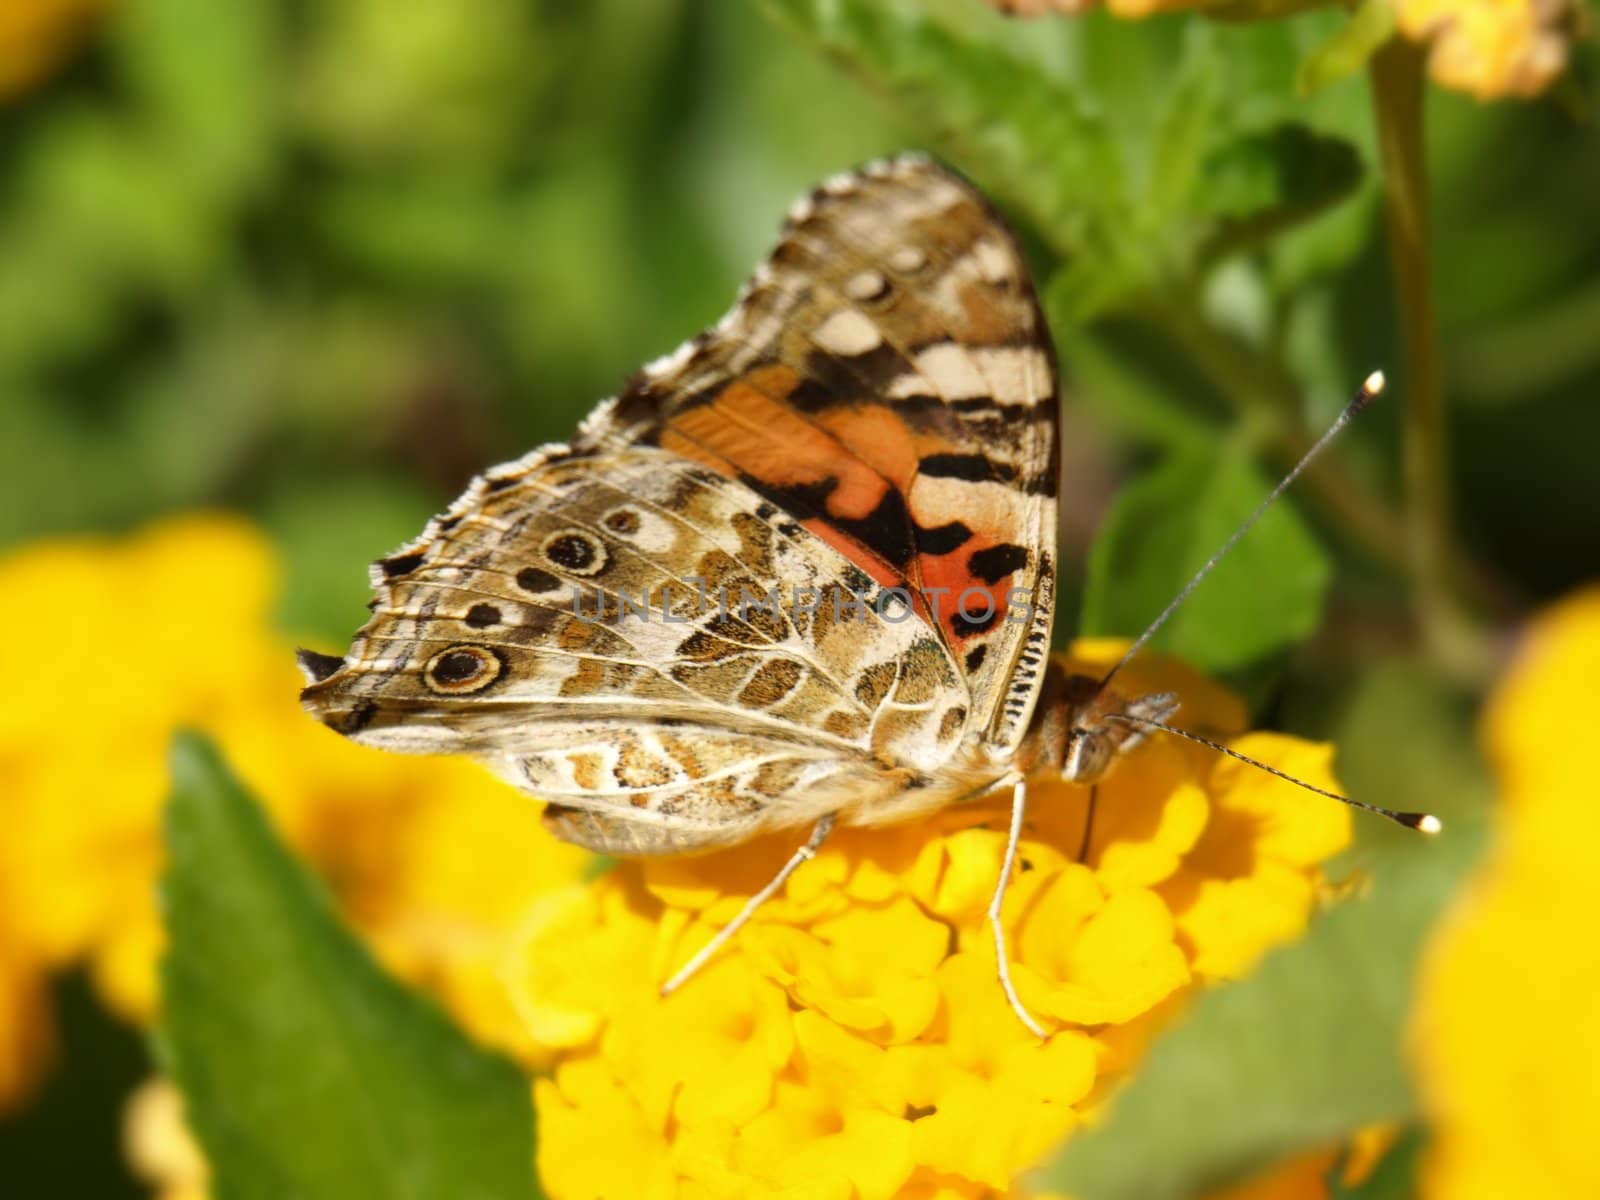 a close-up image of a butterfly on a lantana